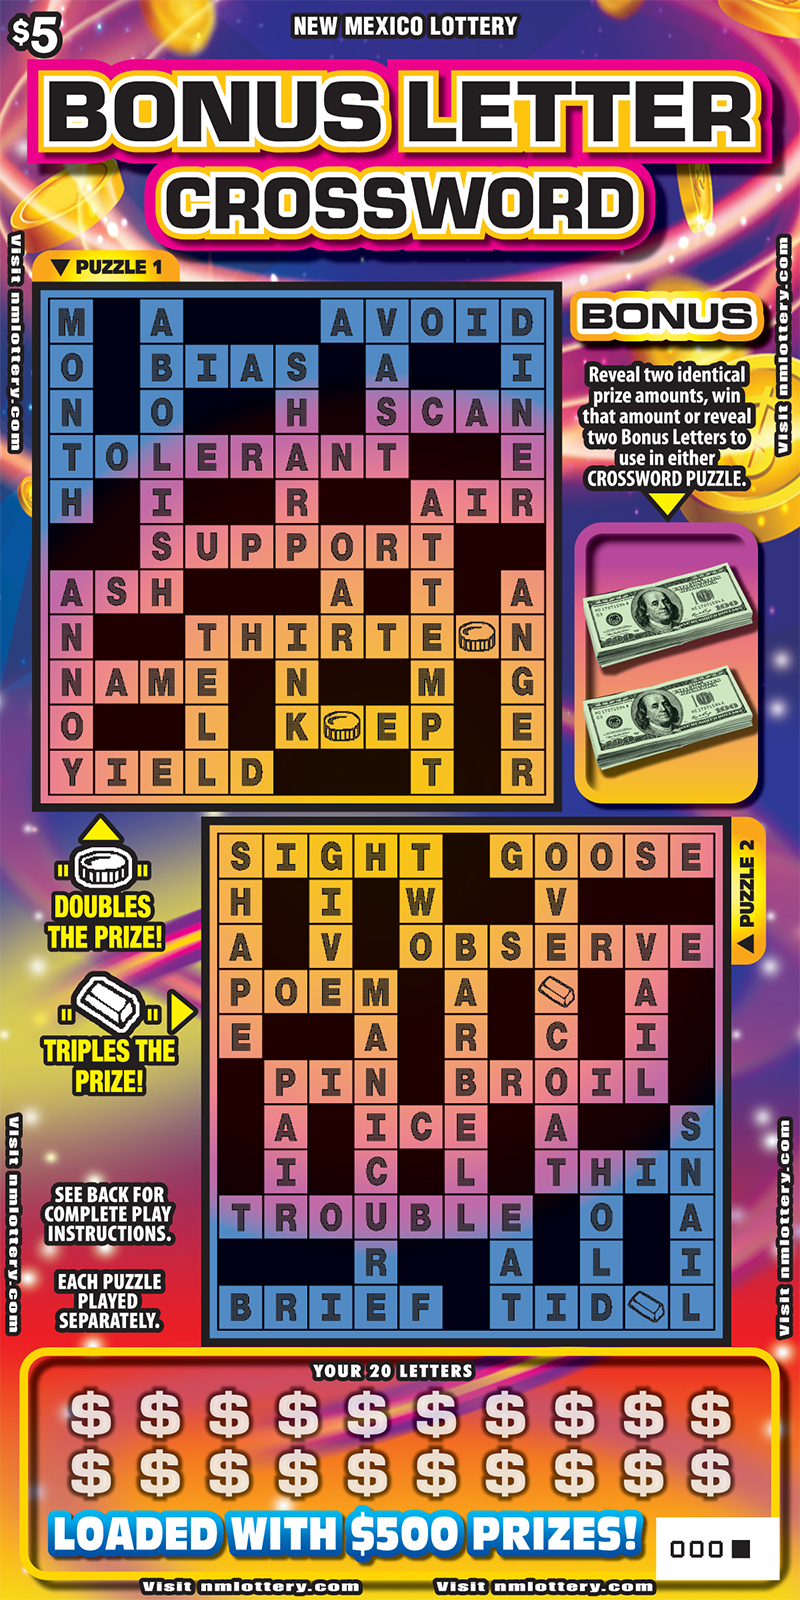 Bonus Letter Crossword Scratcher